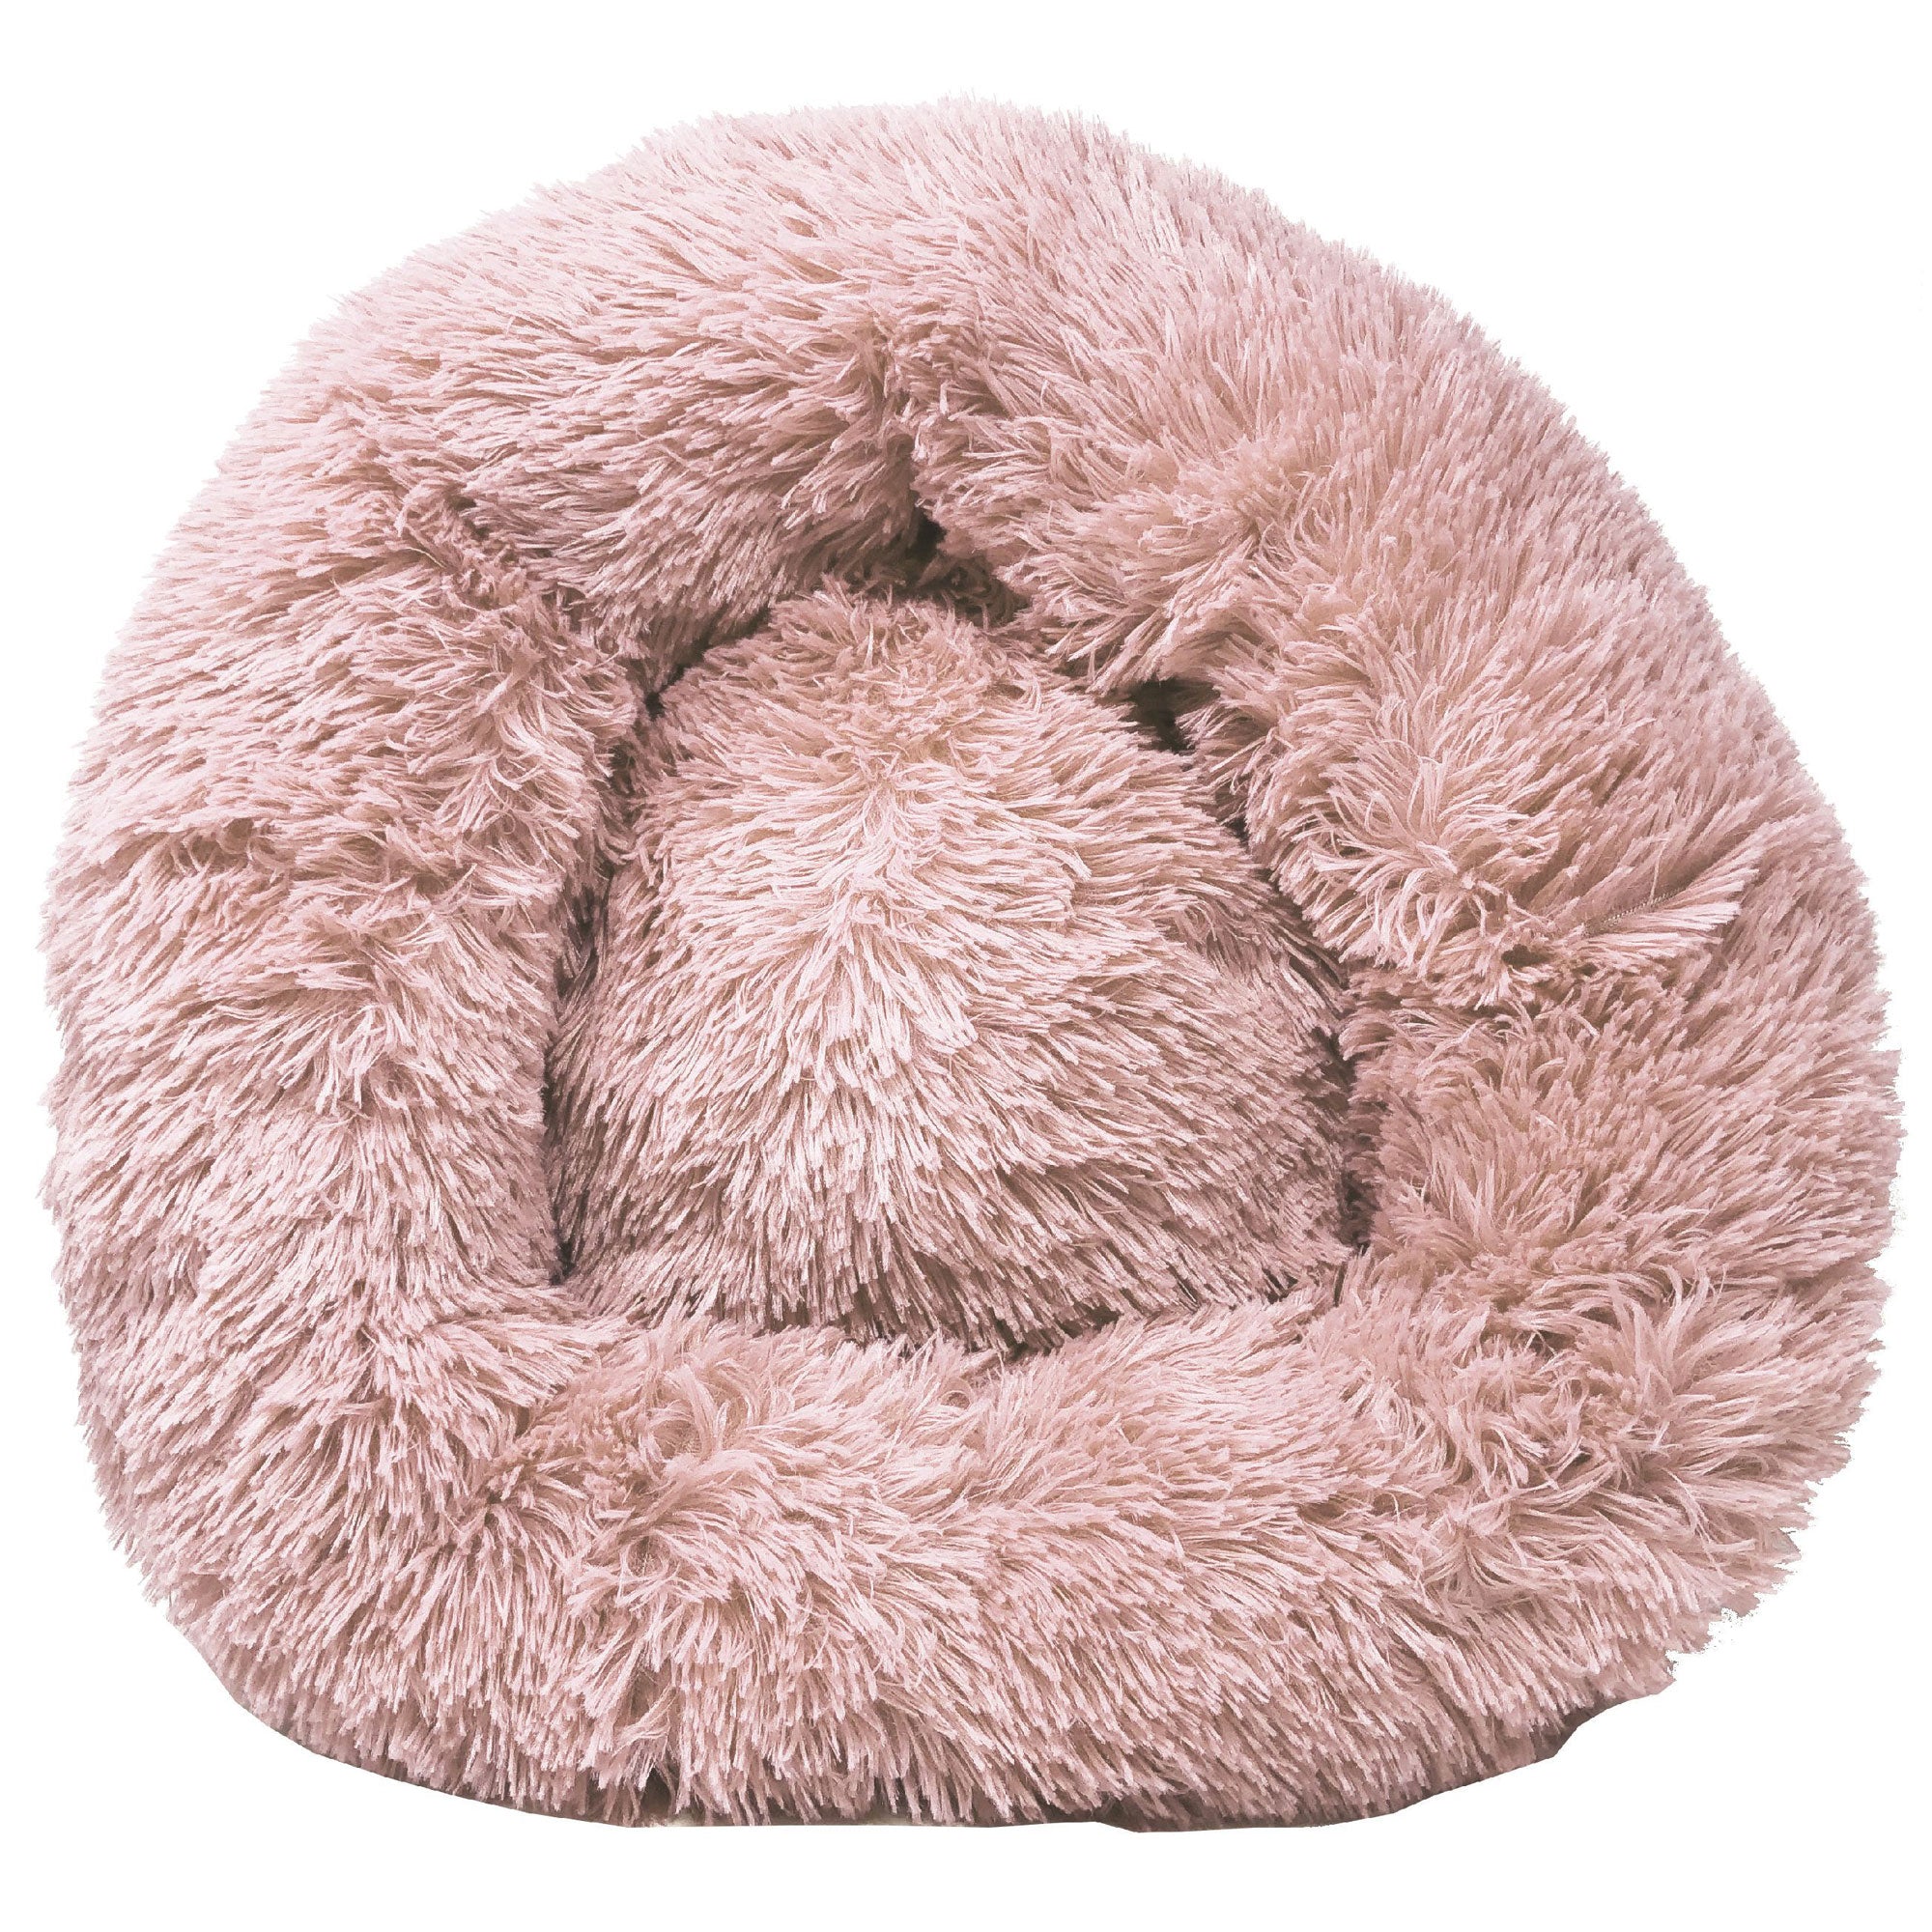 Pet Life Nestler Plush & Soft Dog Bed - Pink - Medium